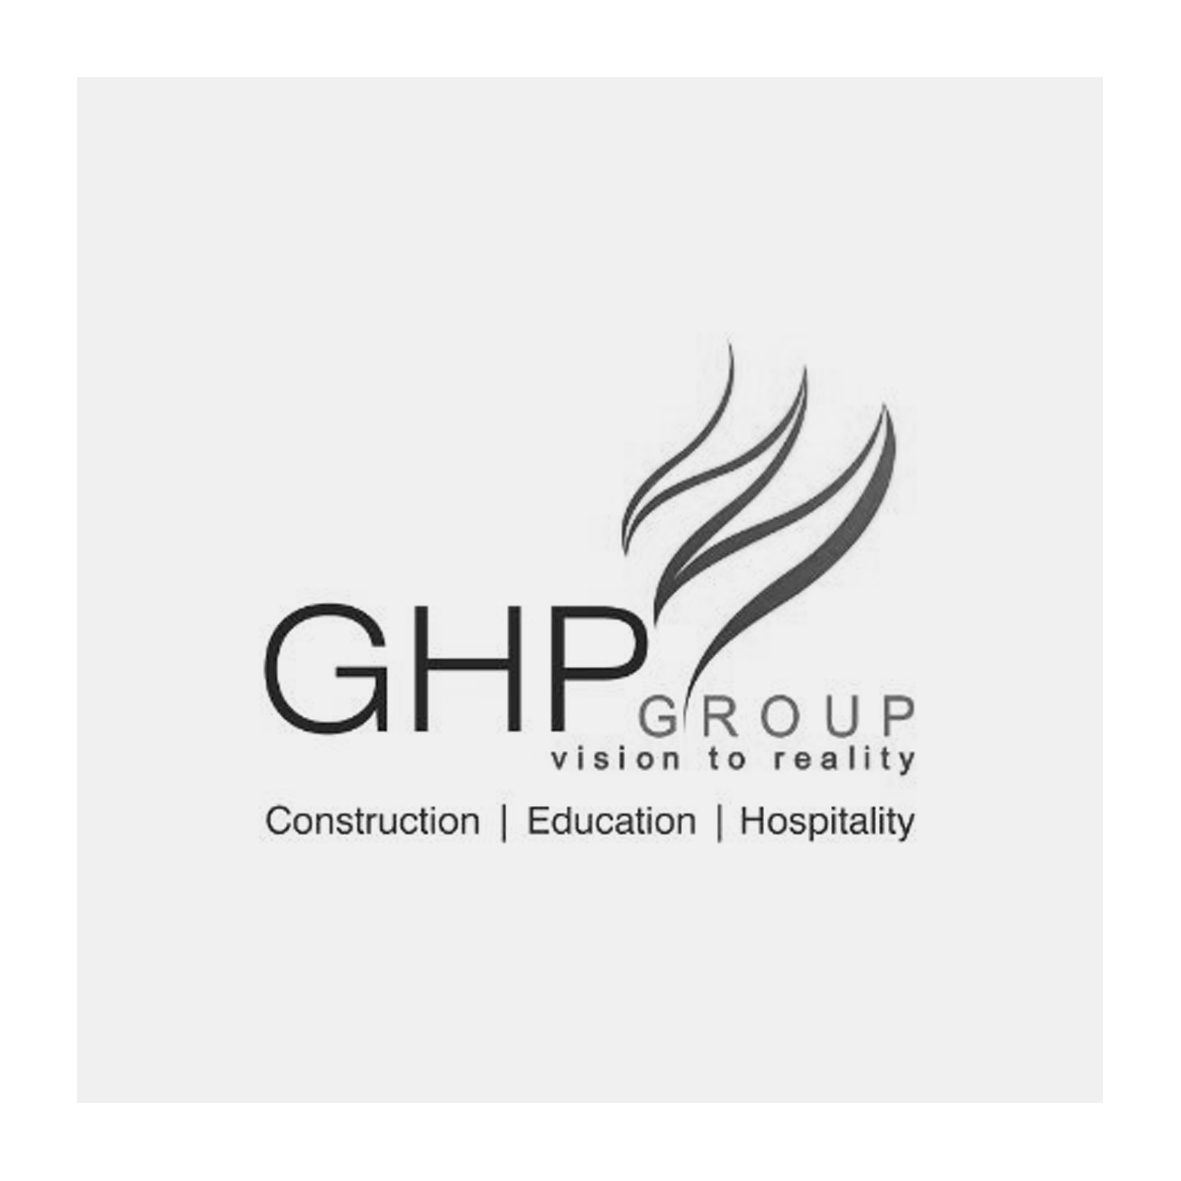 ghp group